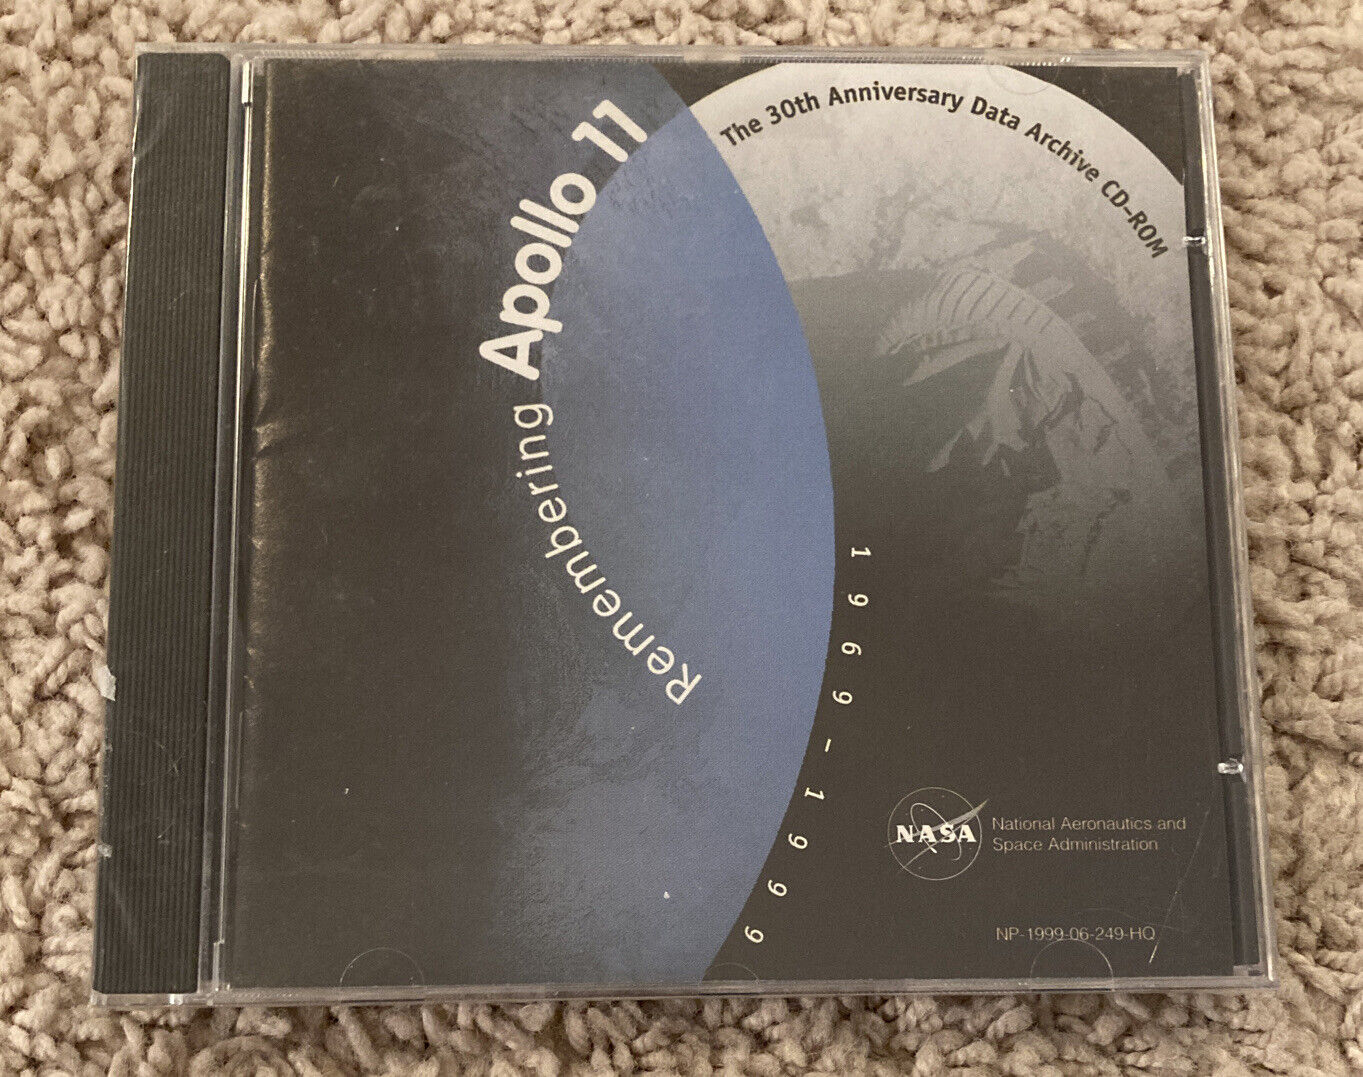 Remembering Apollo 11 - The 30th Anniversary Data Archive - CD-ROM - BRAND NEW